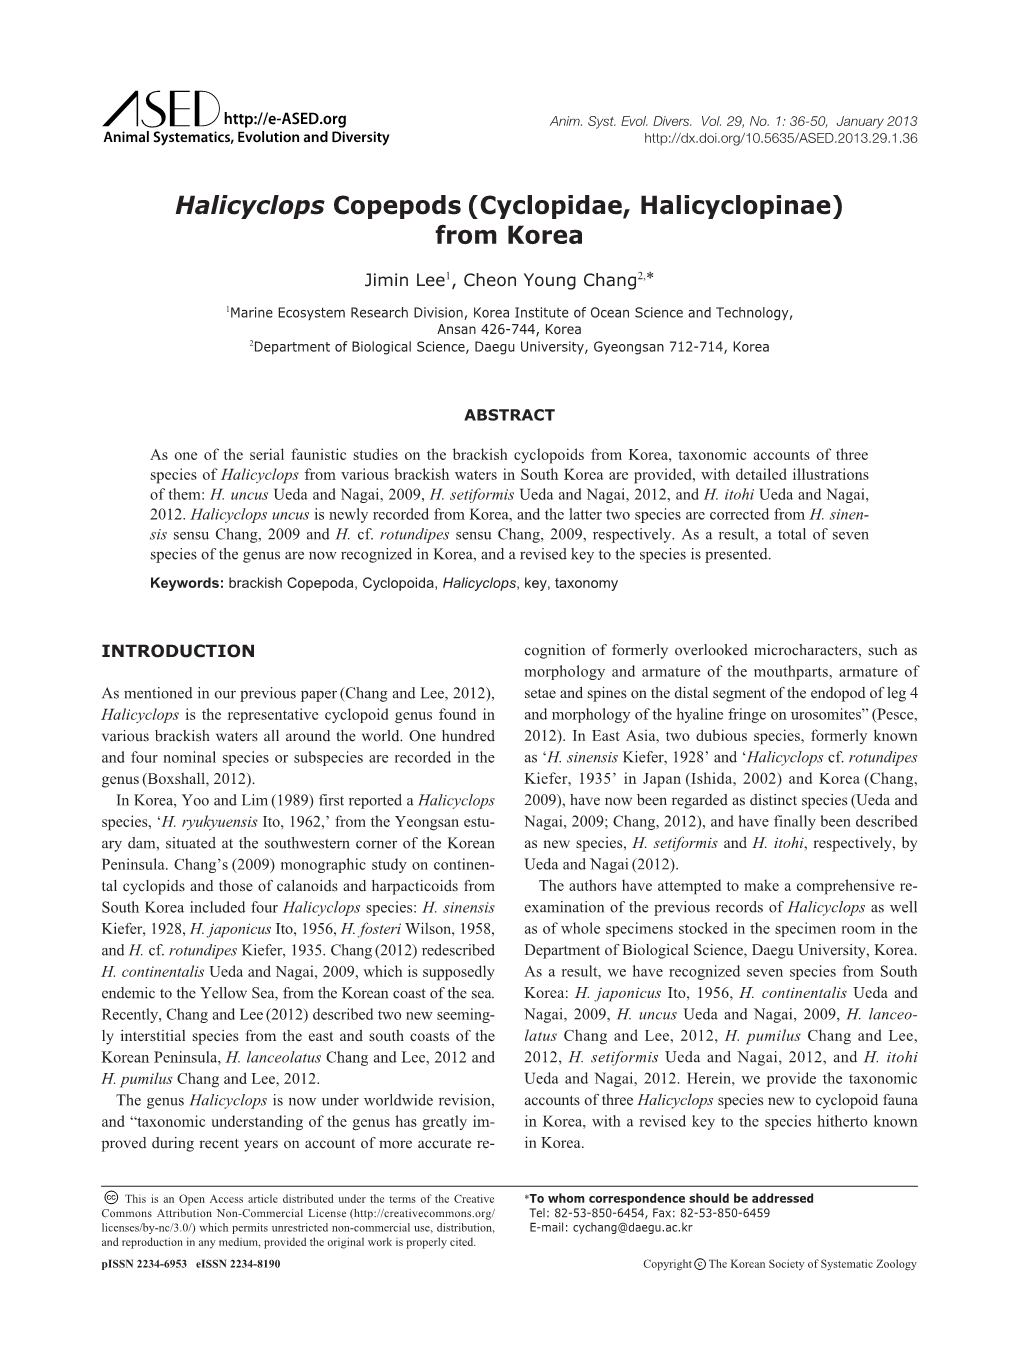 Halicyclops Copepods (Cyclopidae, Halicyclopinae) from Korea